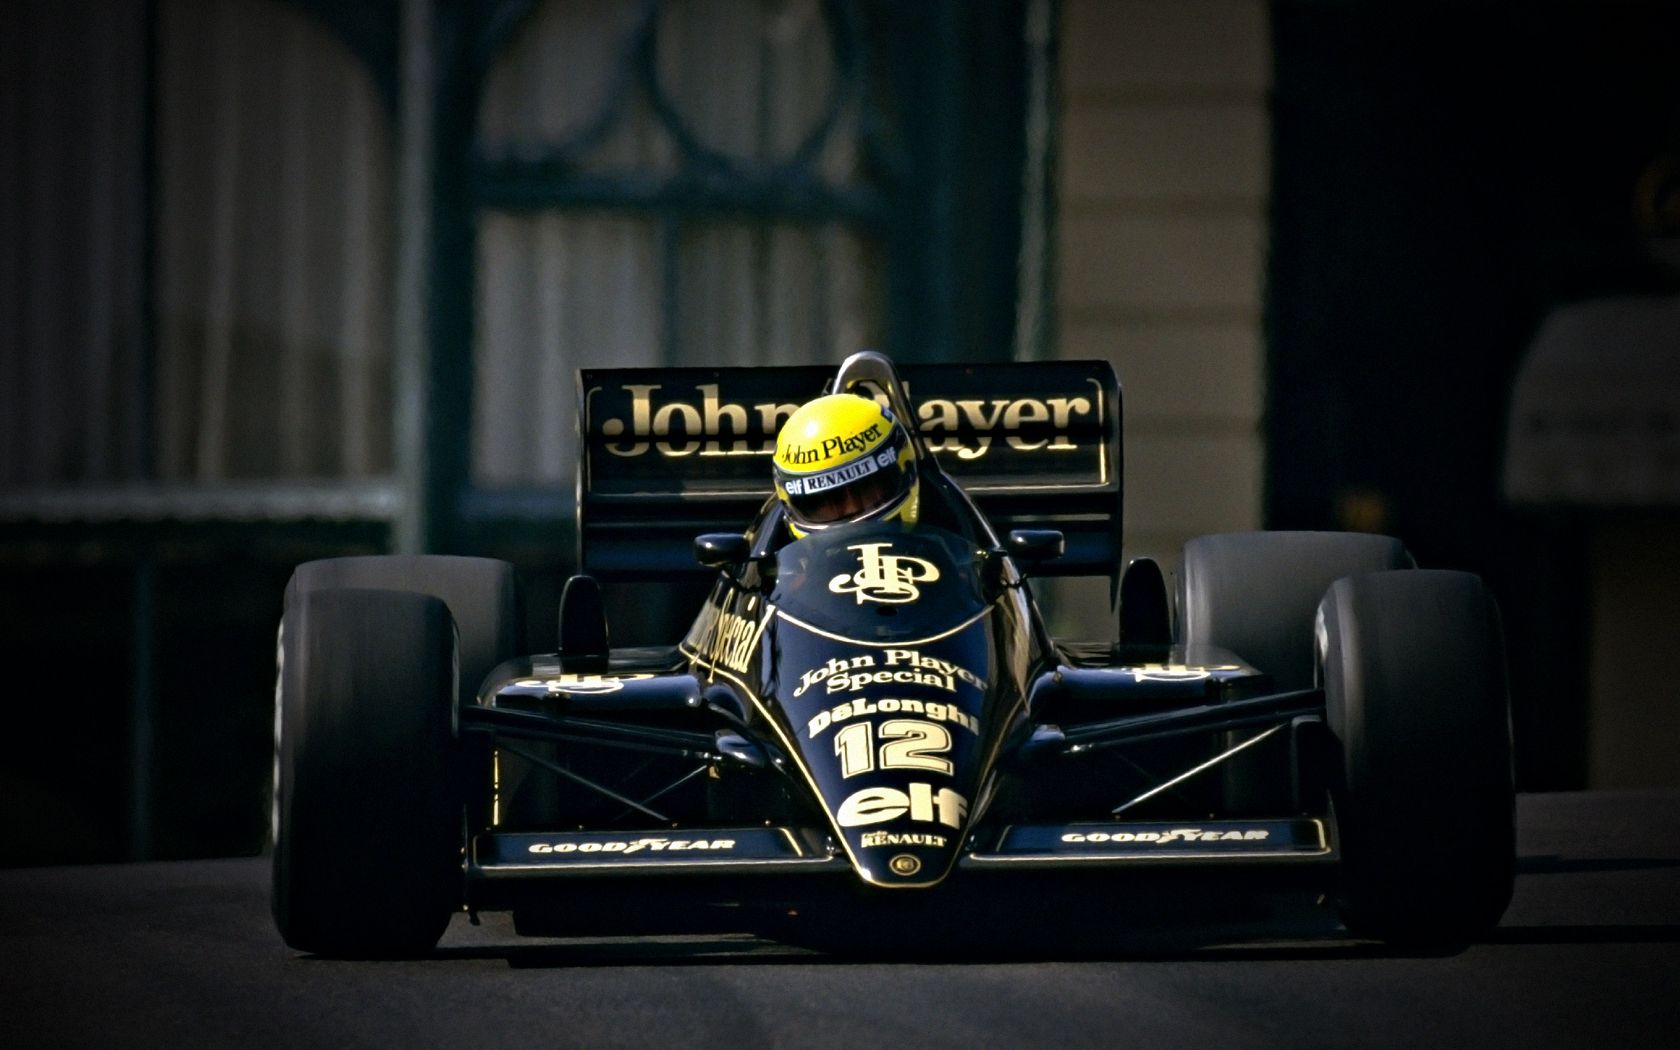 Ayrton Senna Wallpaper Lotus 2 by JohnnySlowhand on DeviantArt